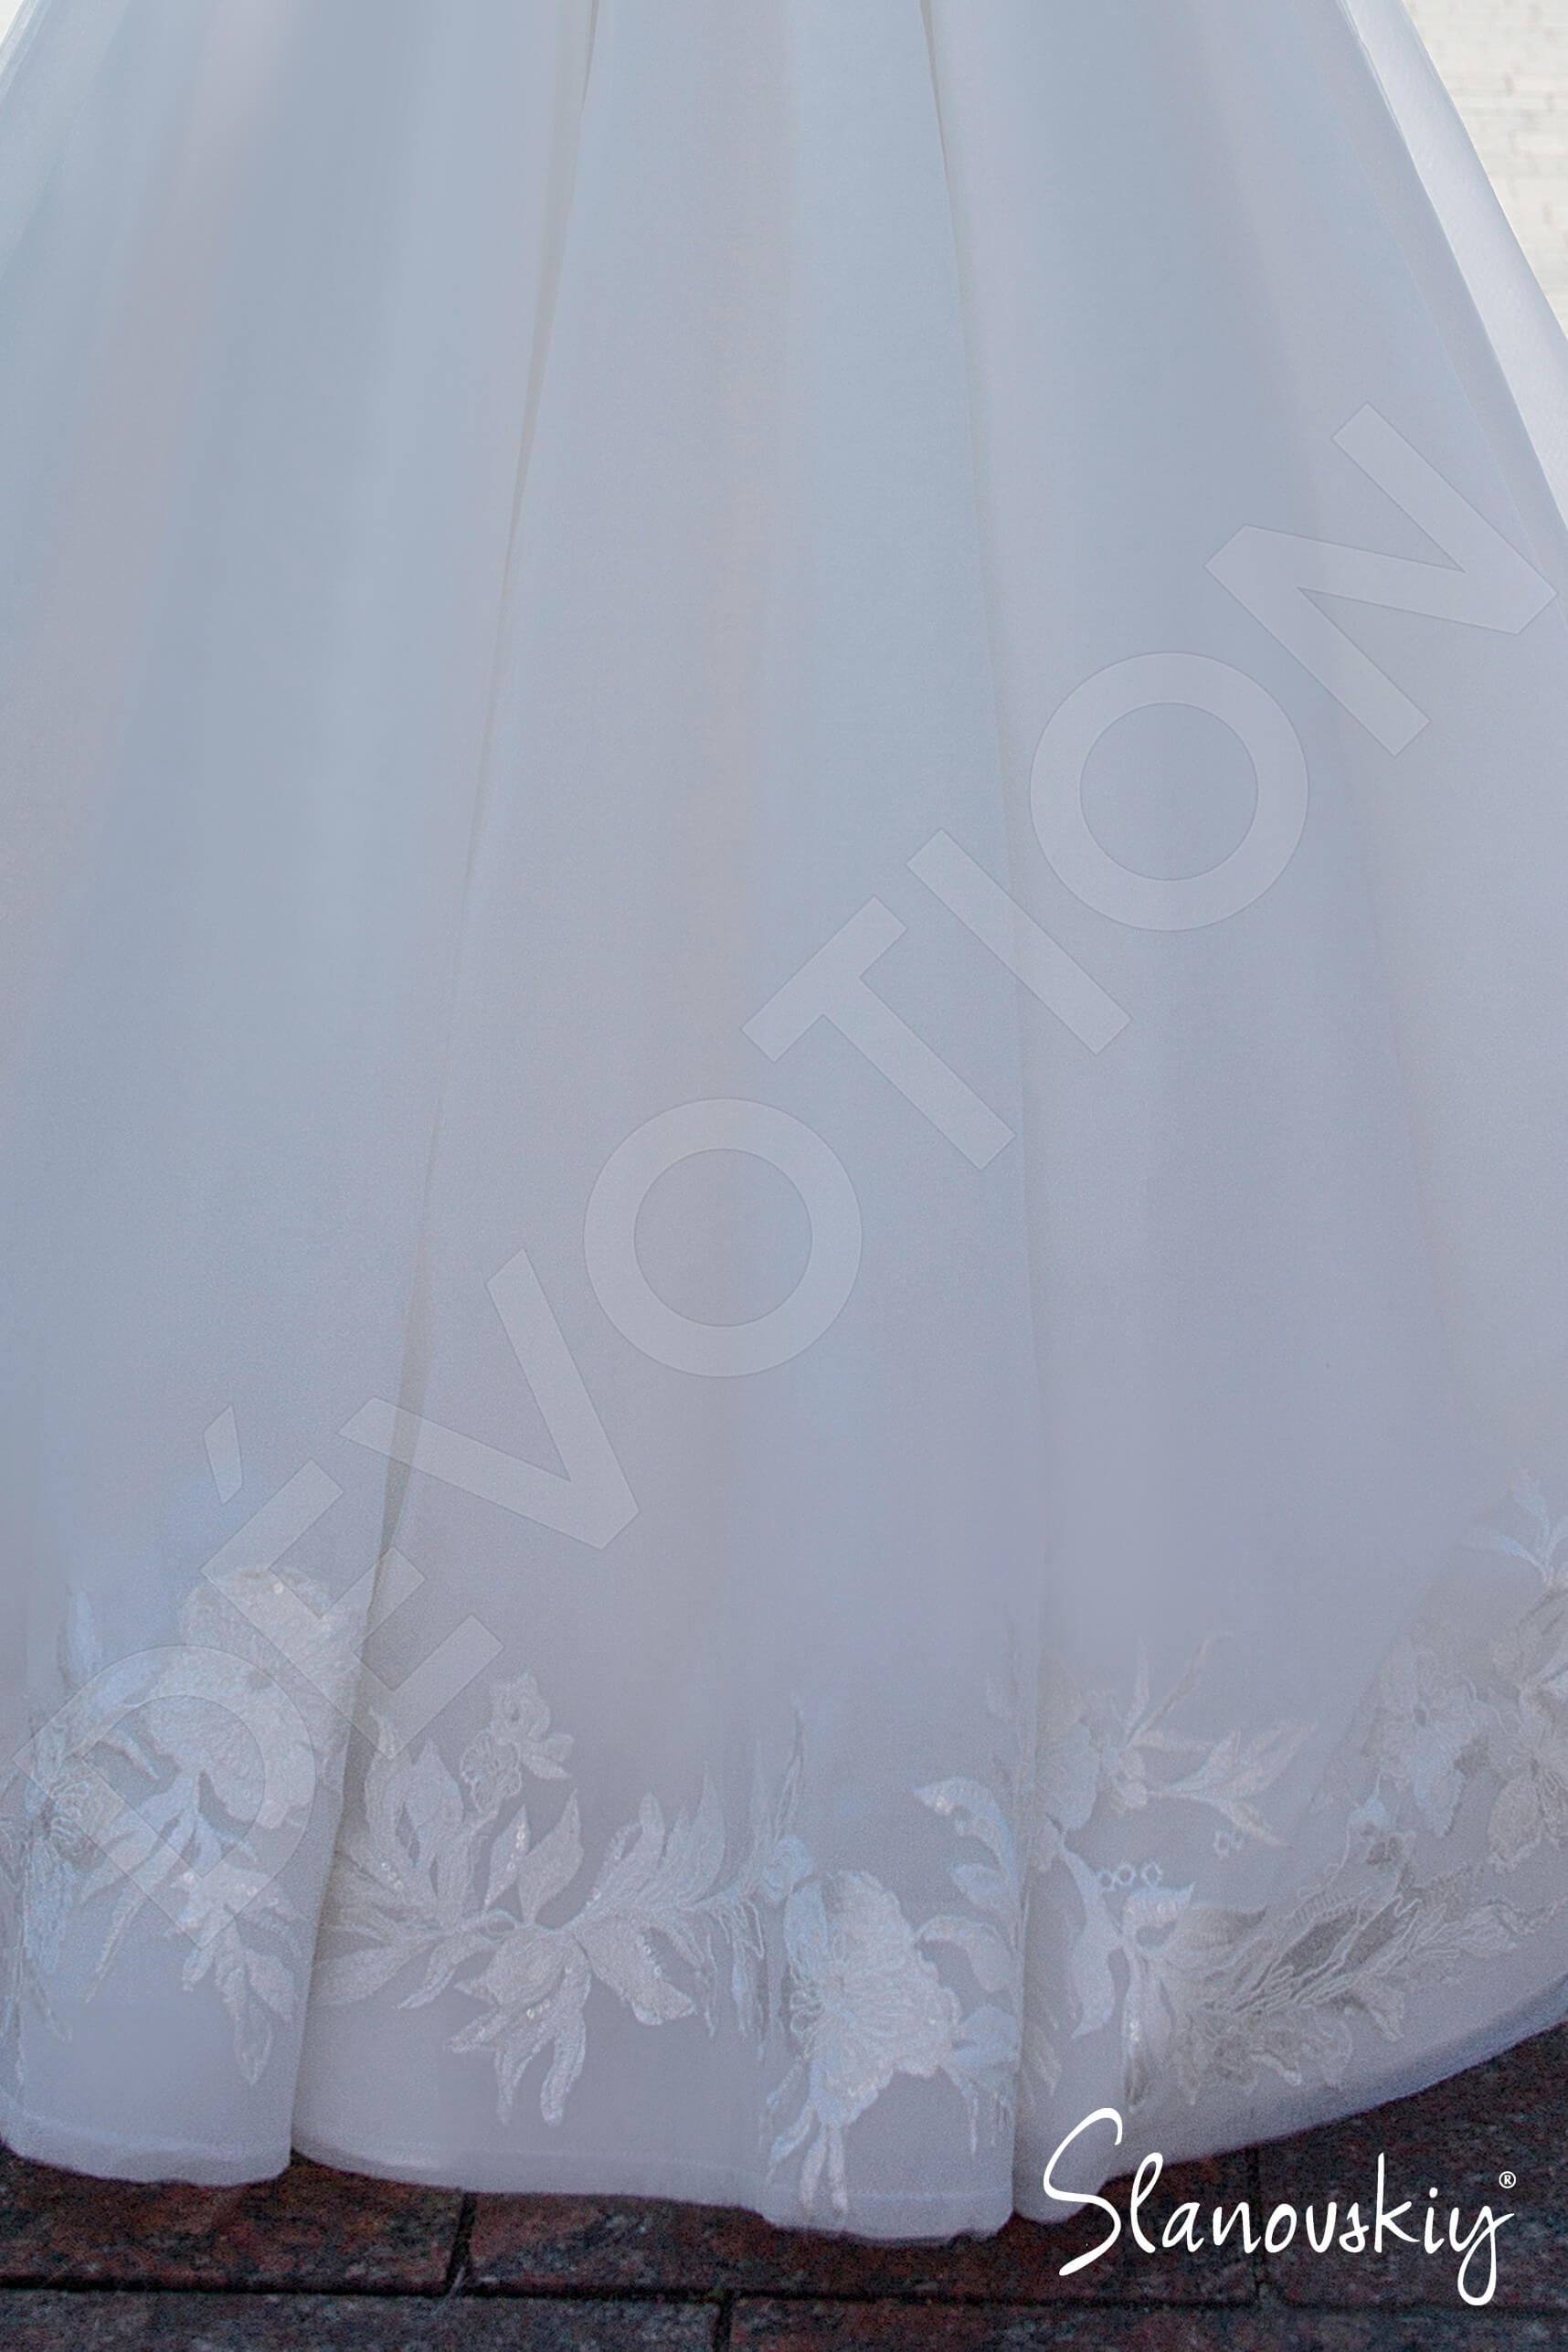 Manuela Princess/Ball Gown Illusion Ivory Milk Wedding dress